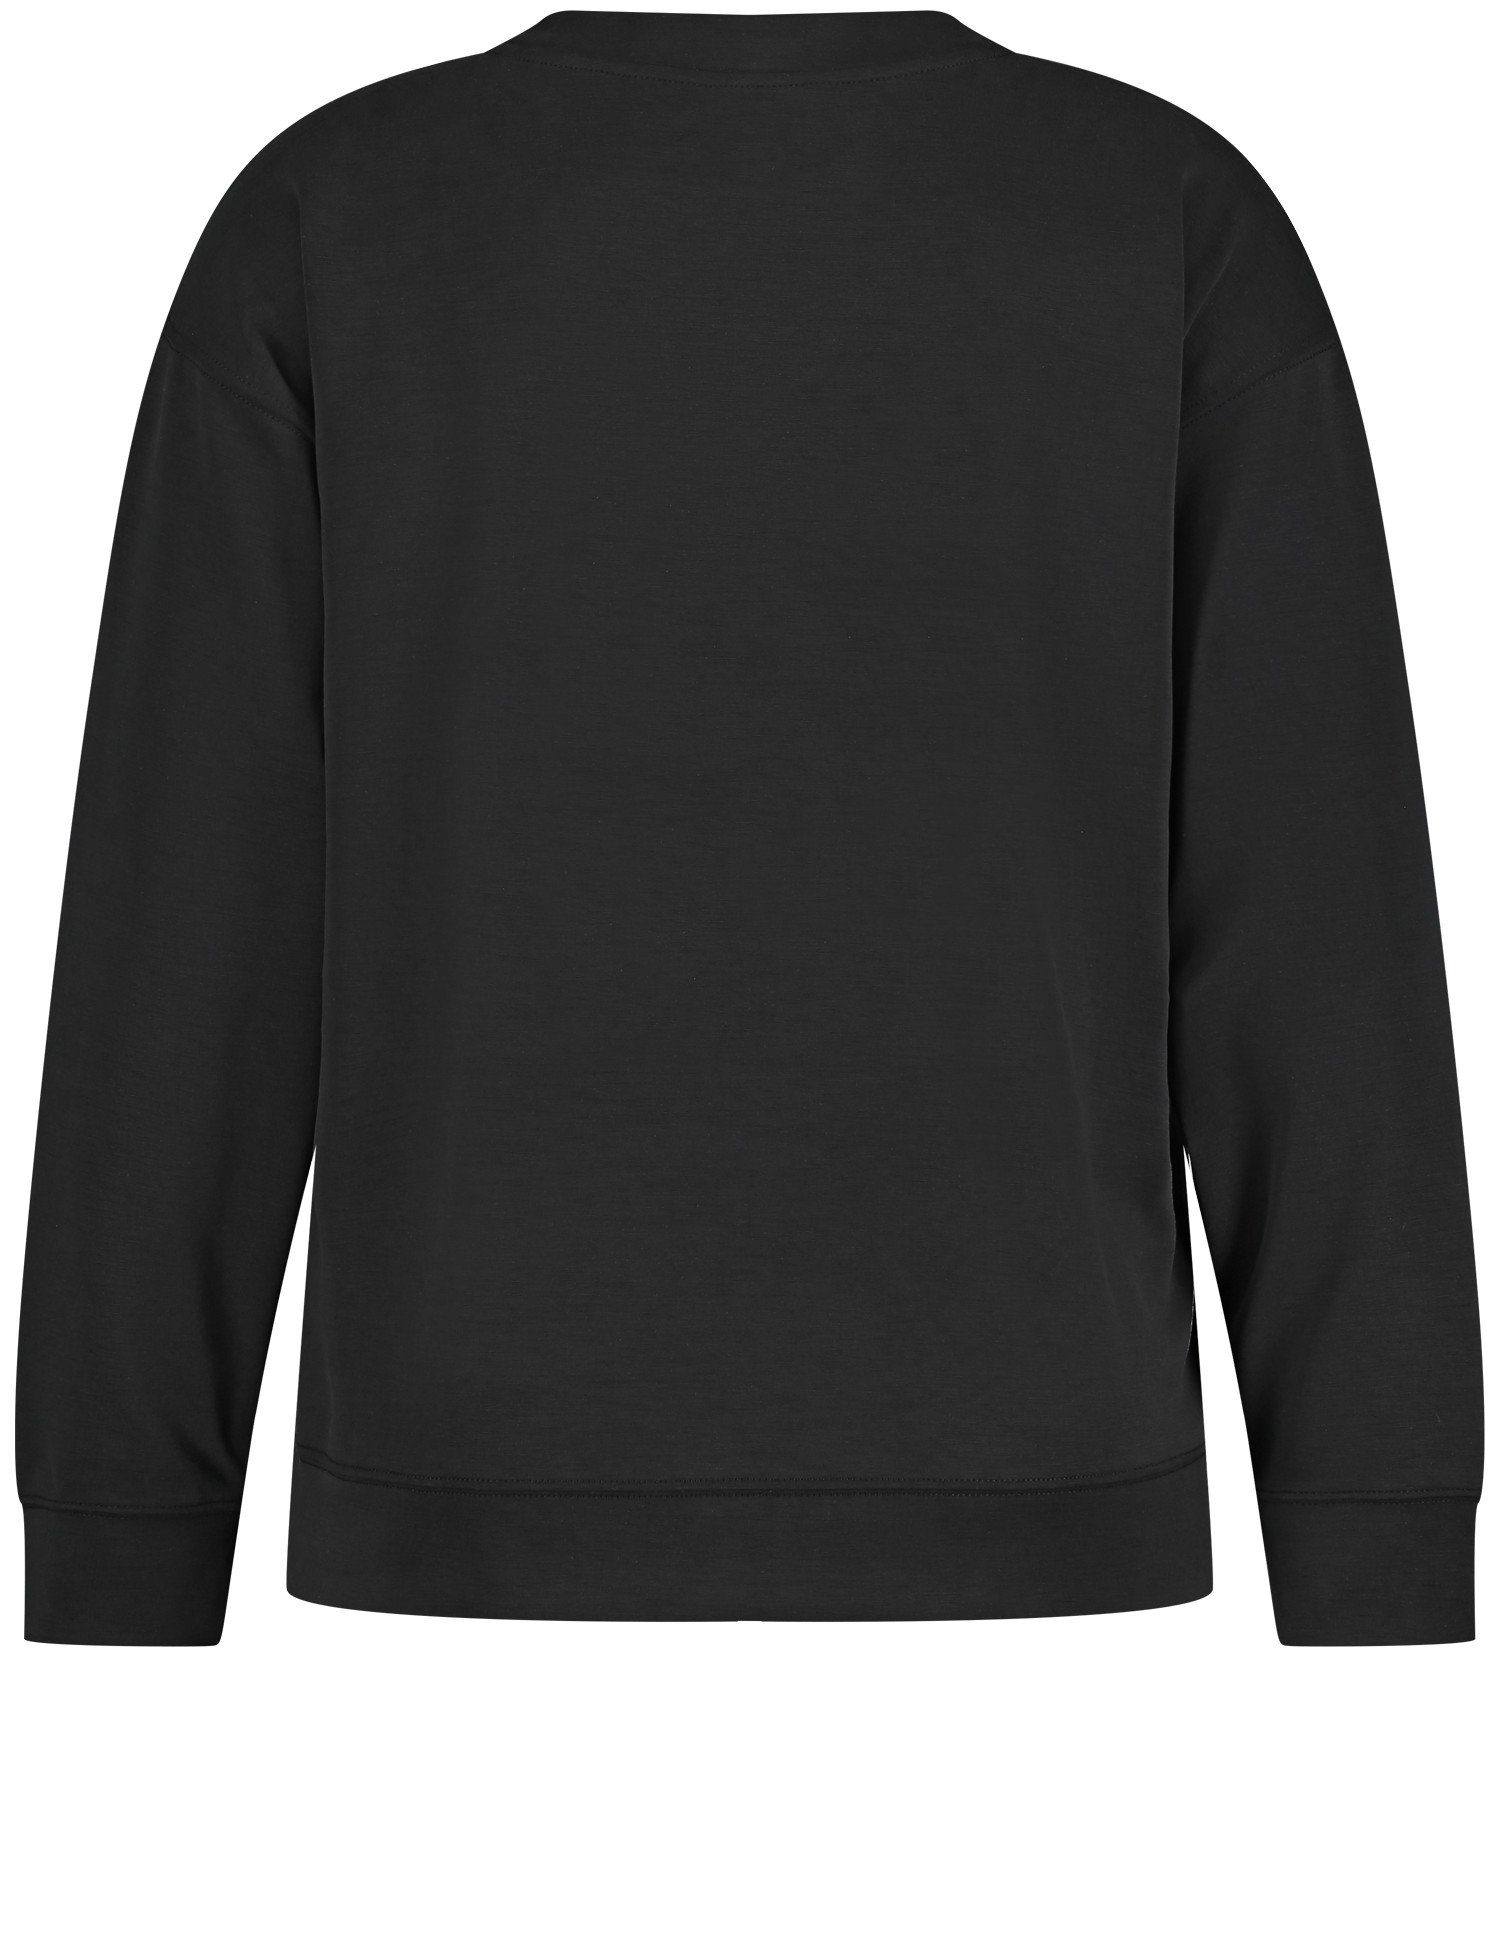 GERRY WEBER Samoon Black Sweatshirt Sweatshirt